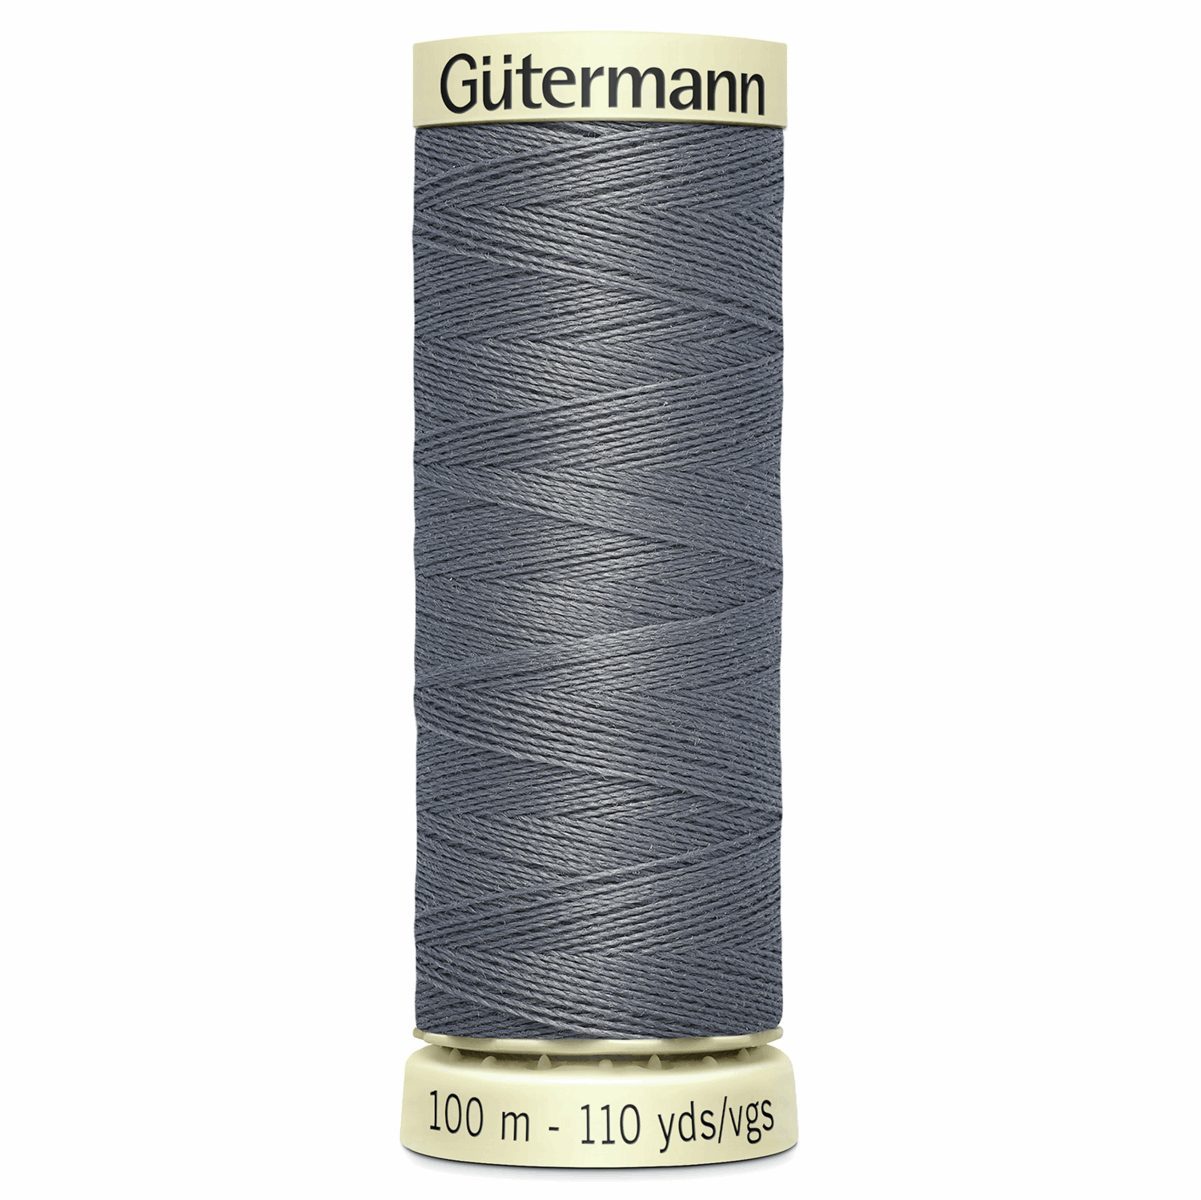 Gutermann Sew-All Thread 100m - Pewter (#497)